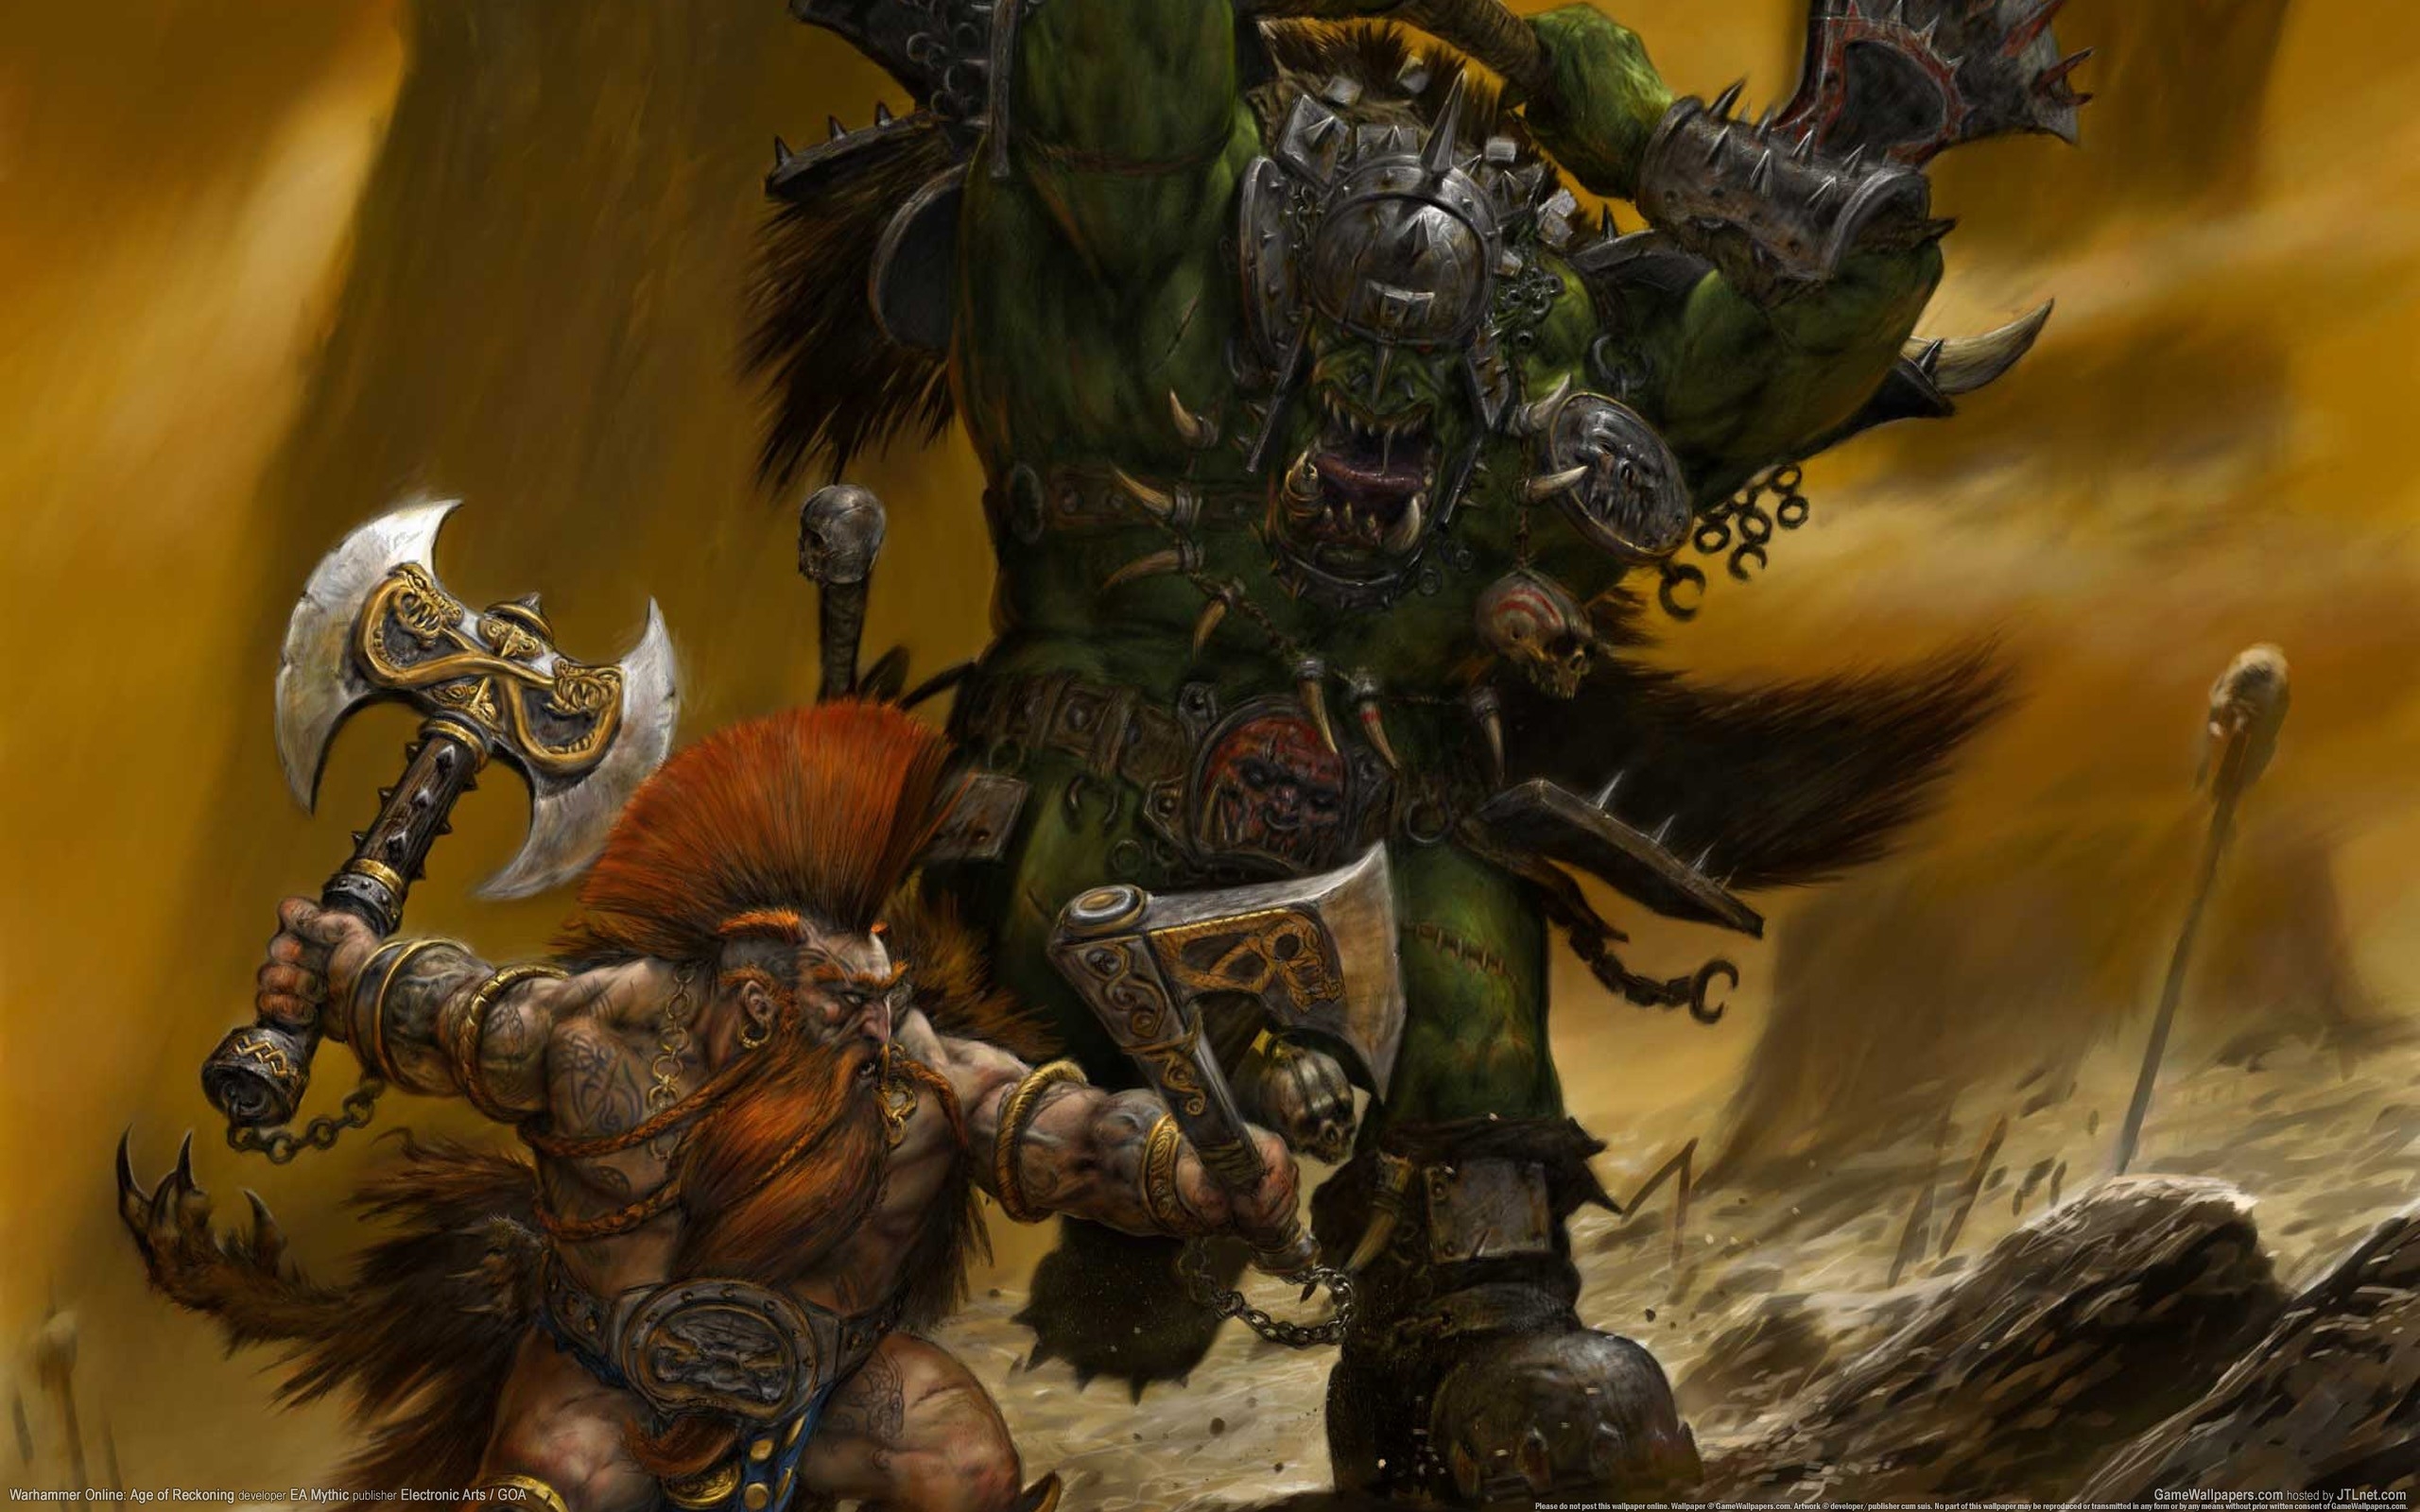 Warhammer Online Wallpaper Pictures Image